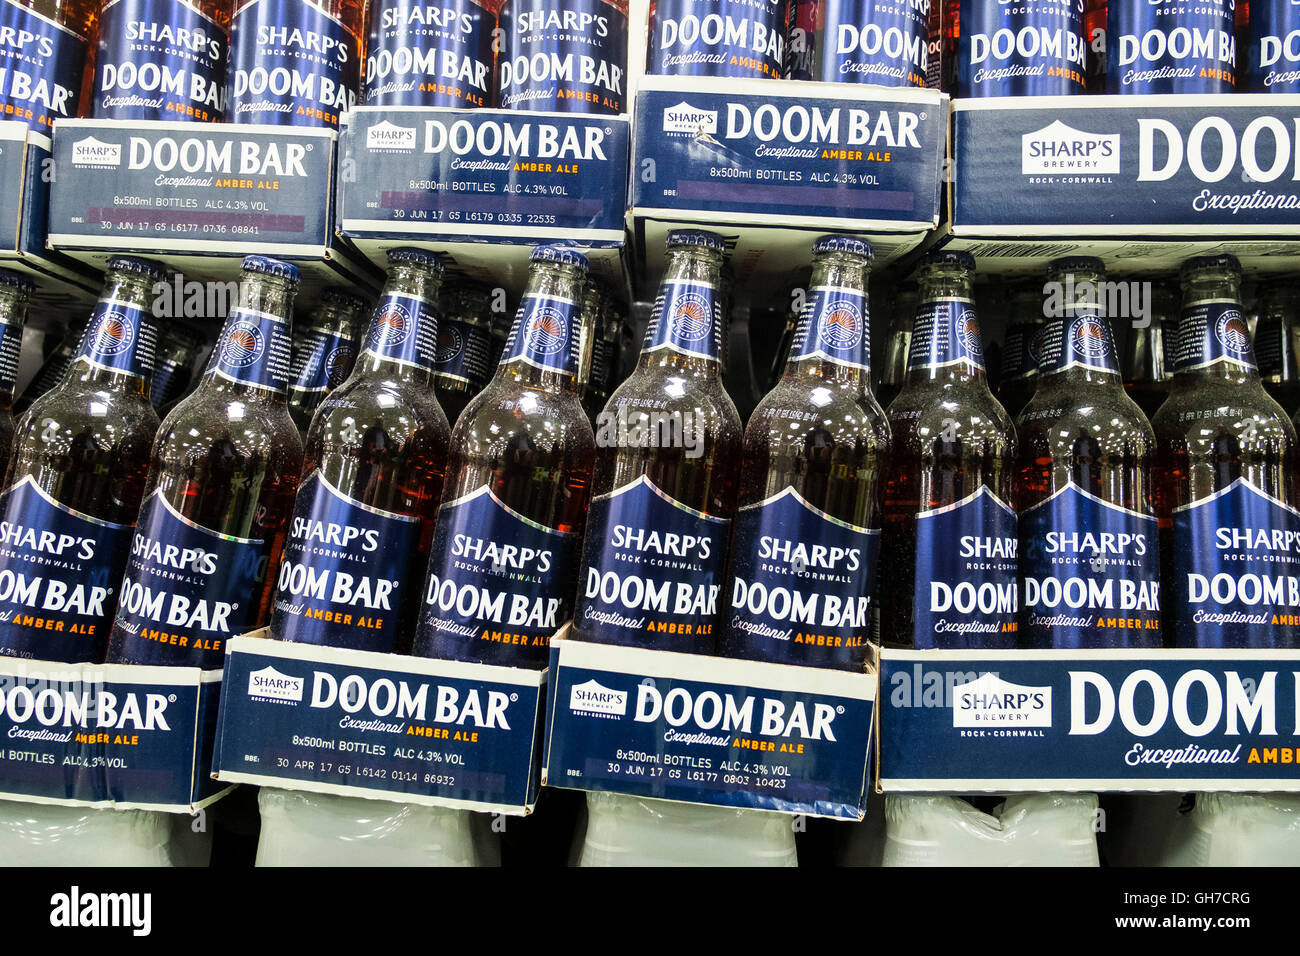 A display of bottles of Doom Bar beer in a supermarket. Stock Photo